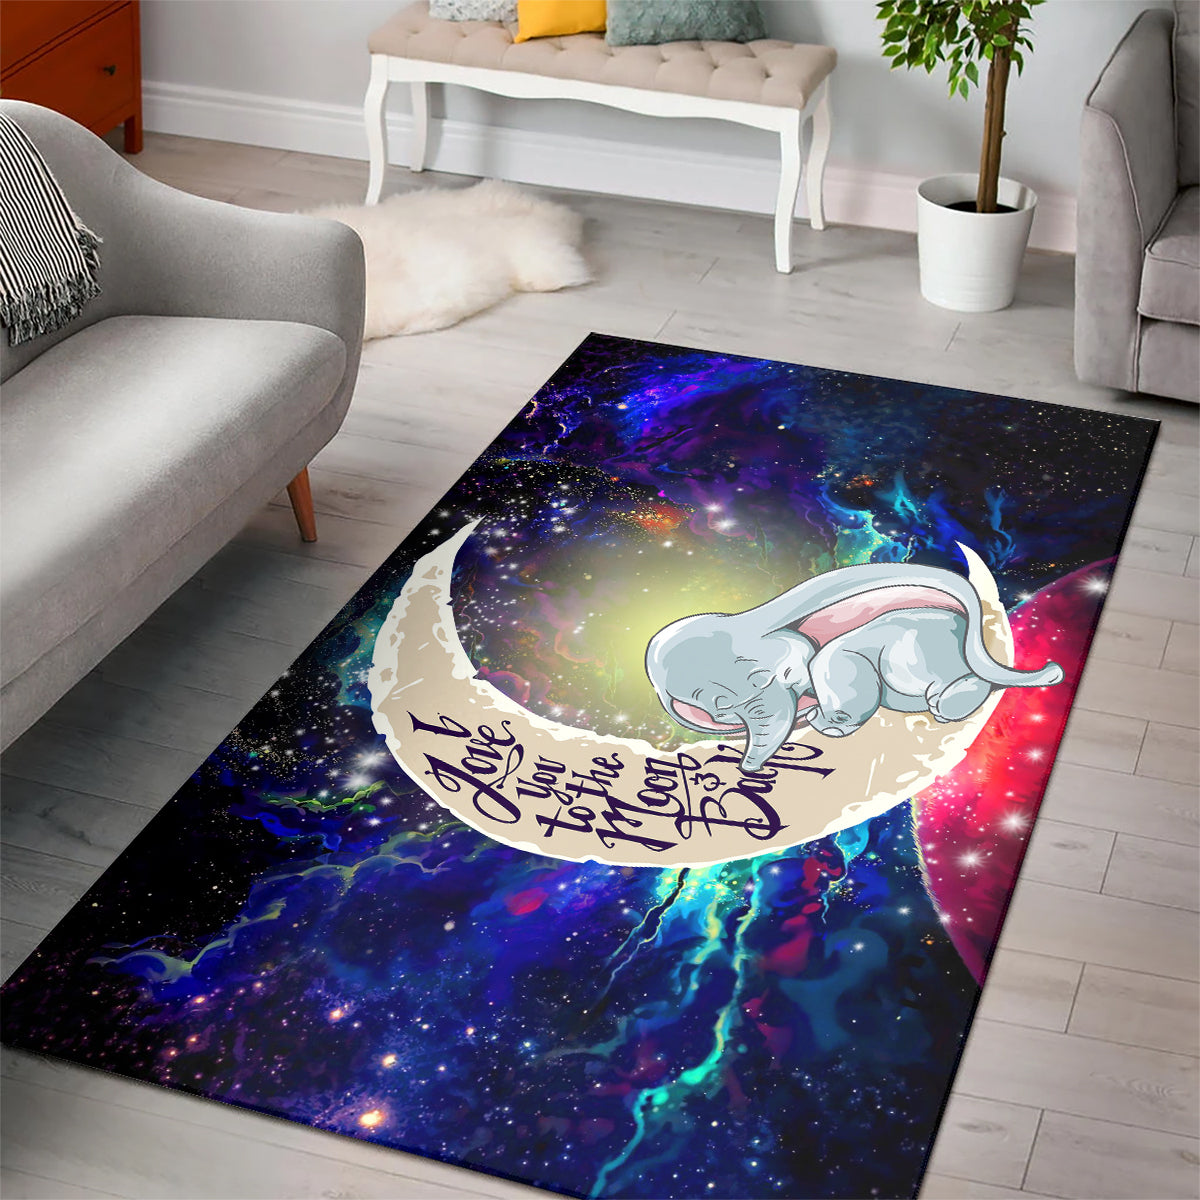 Dumbo Elephant Love You To The Moon Galaxy Carpet Rug Home Room Decor